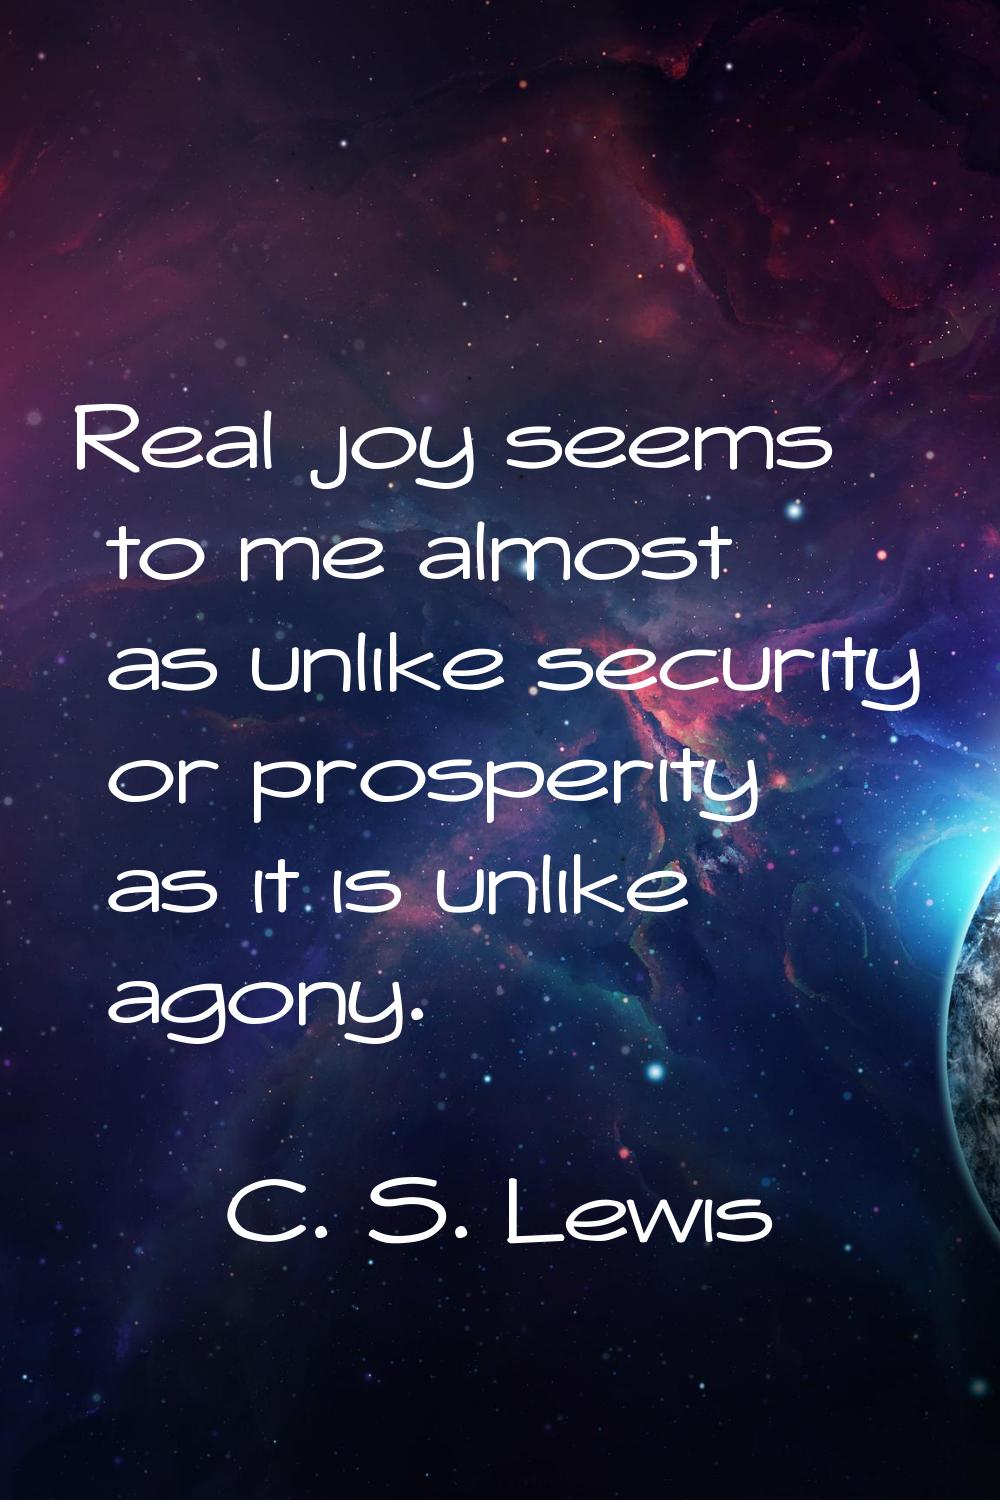 Real joy seems to me almost as unlike security or prosperity as it is unlike agony.